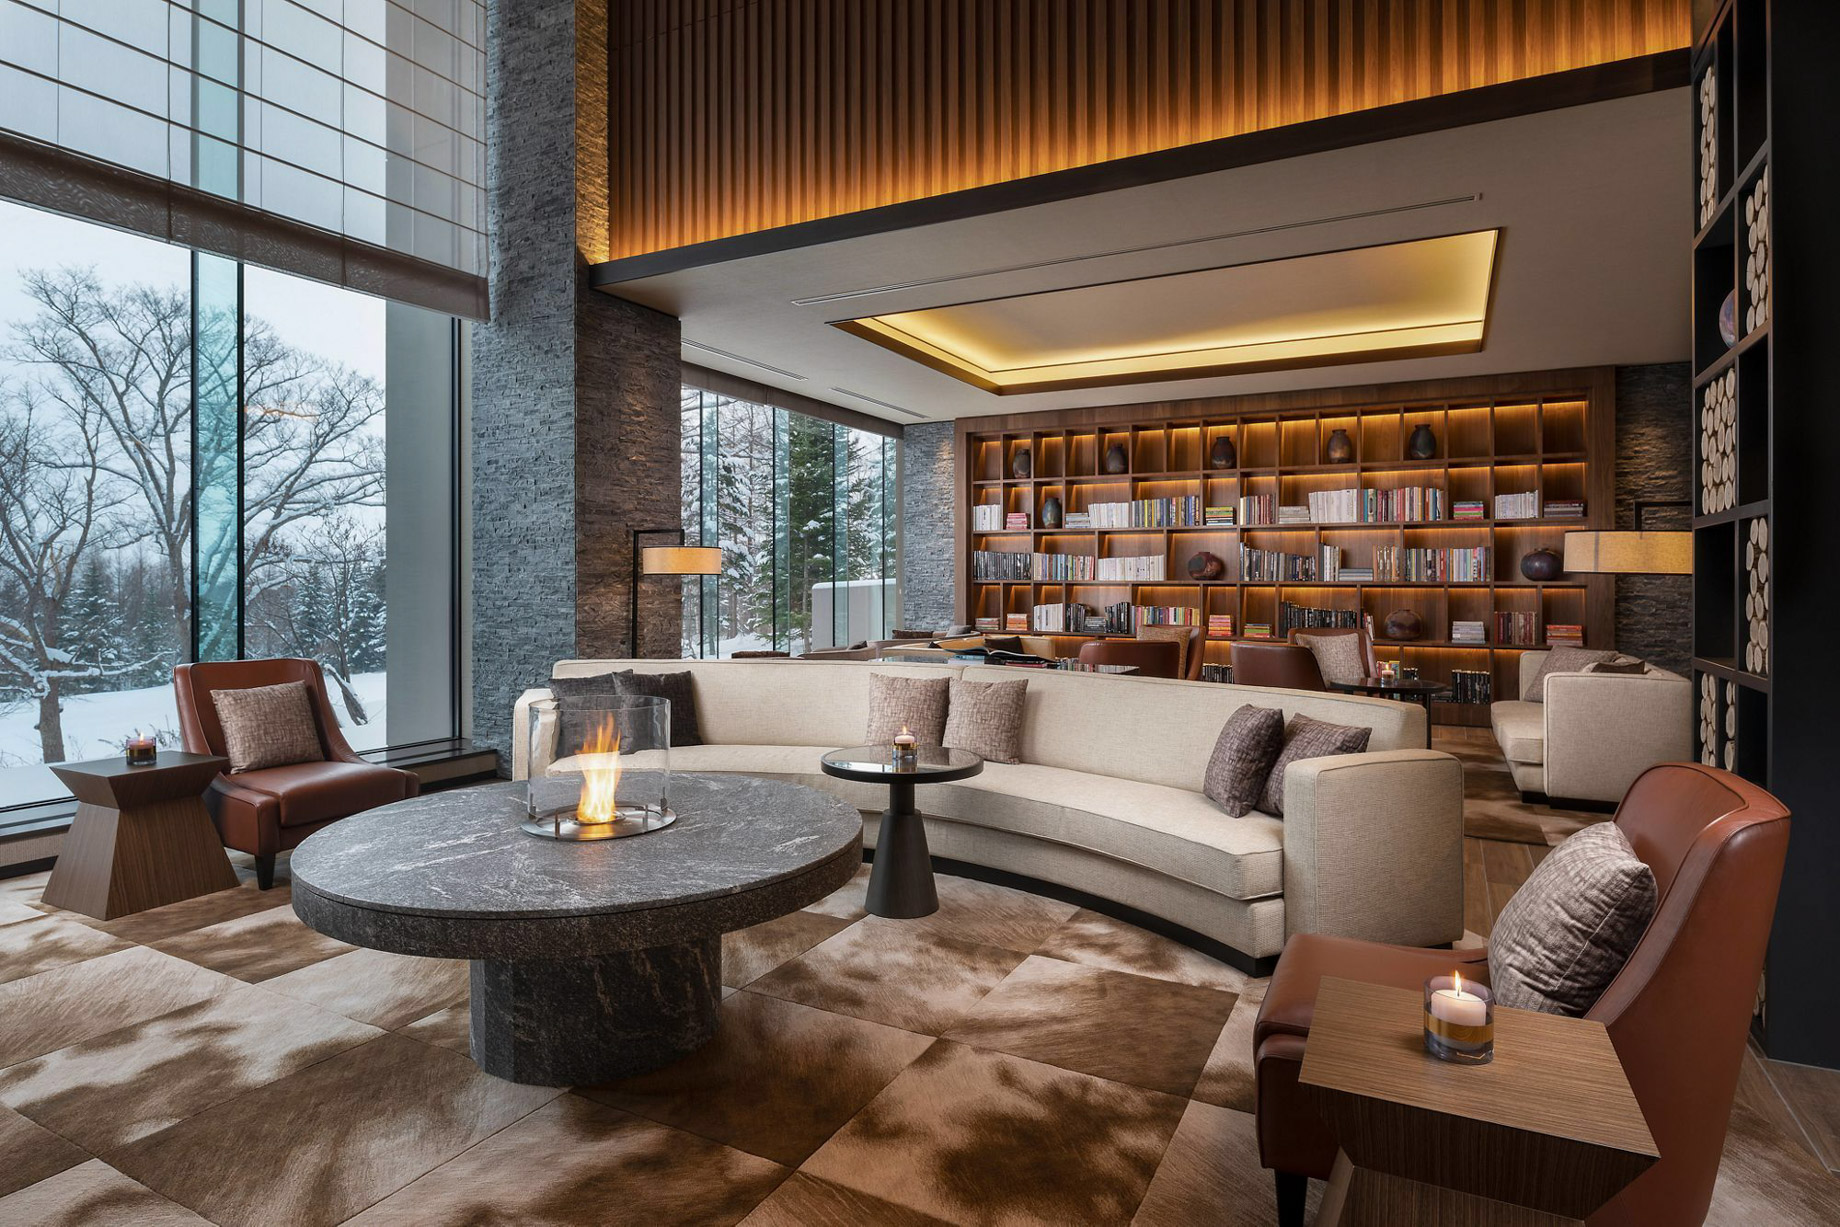 Higashiyama Niseko Village, A Ritz-Carlton Reserve Hotel - Hokkaido, Japan - Ume Lounge Interior